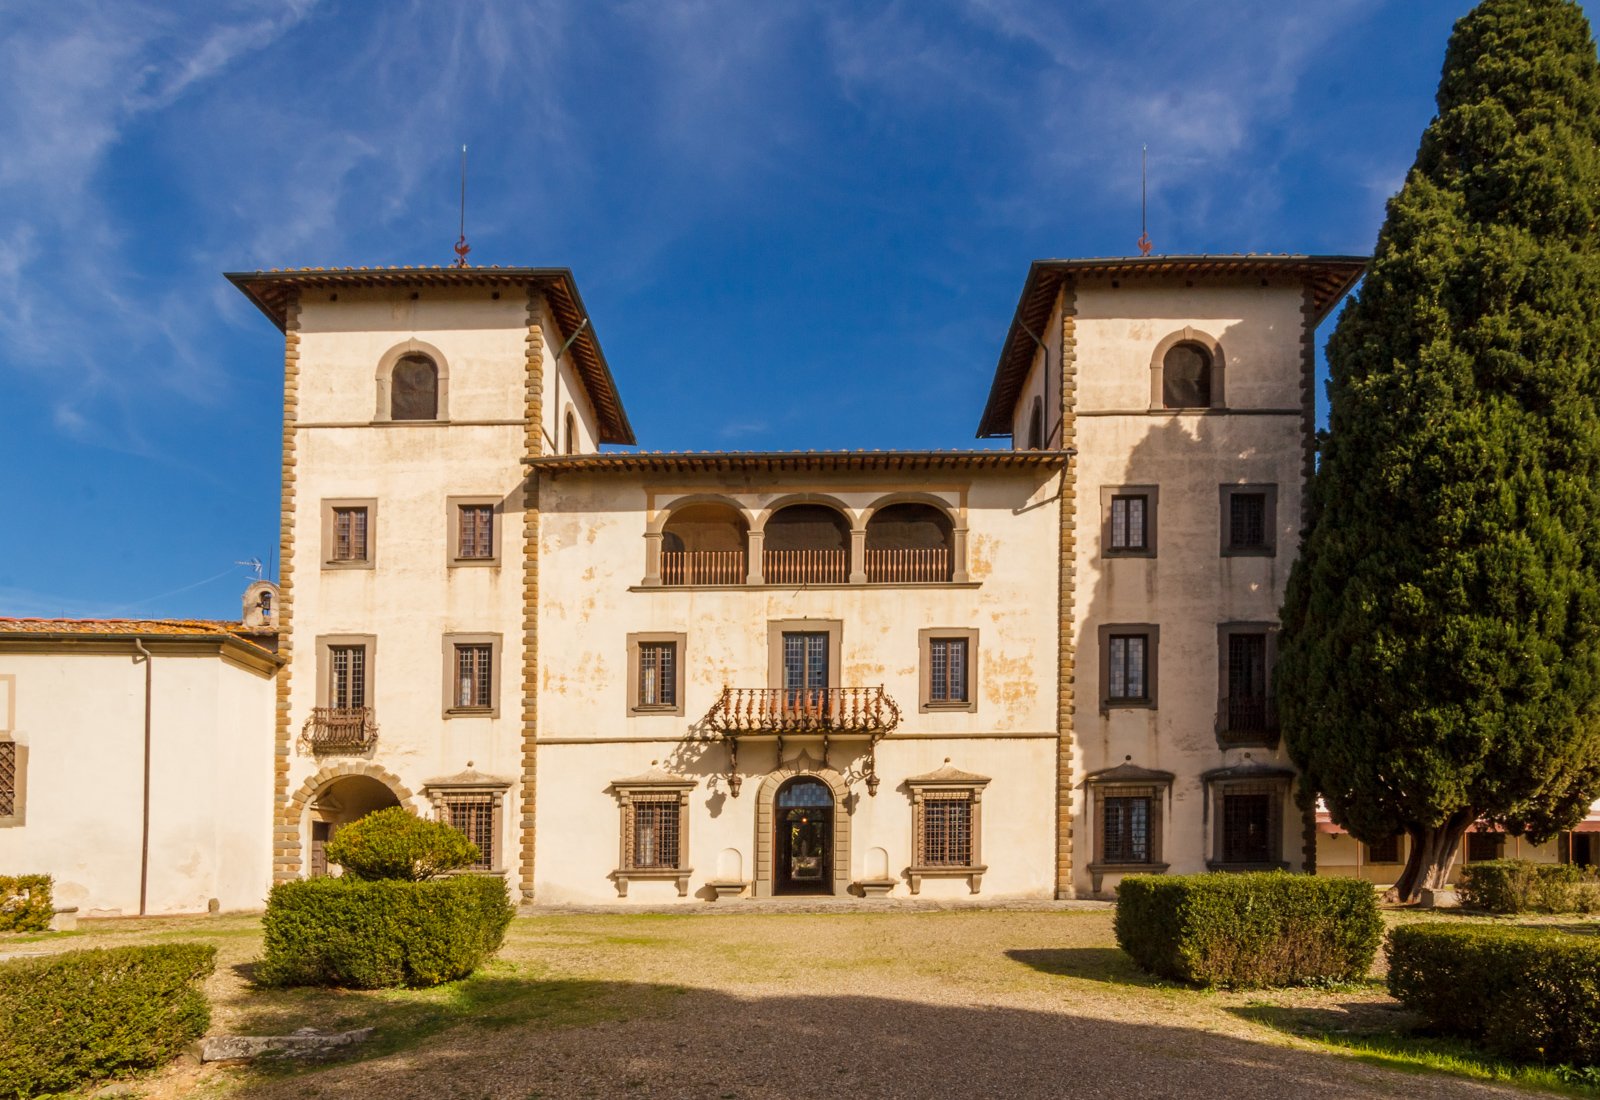 Francis+York+ Tuscan Villa Rental Surrounded by Botanical Park Near Florence, Italy  00005.jpeg